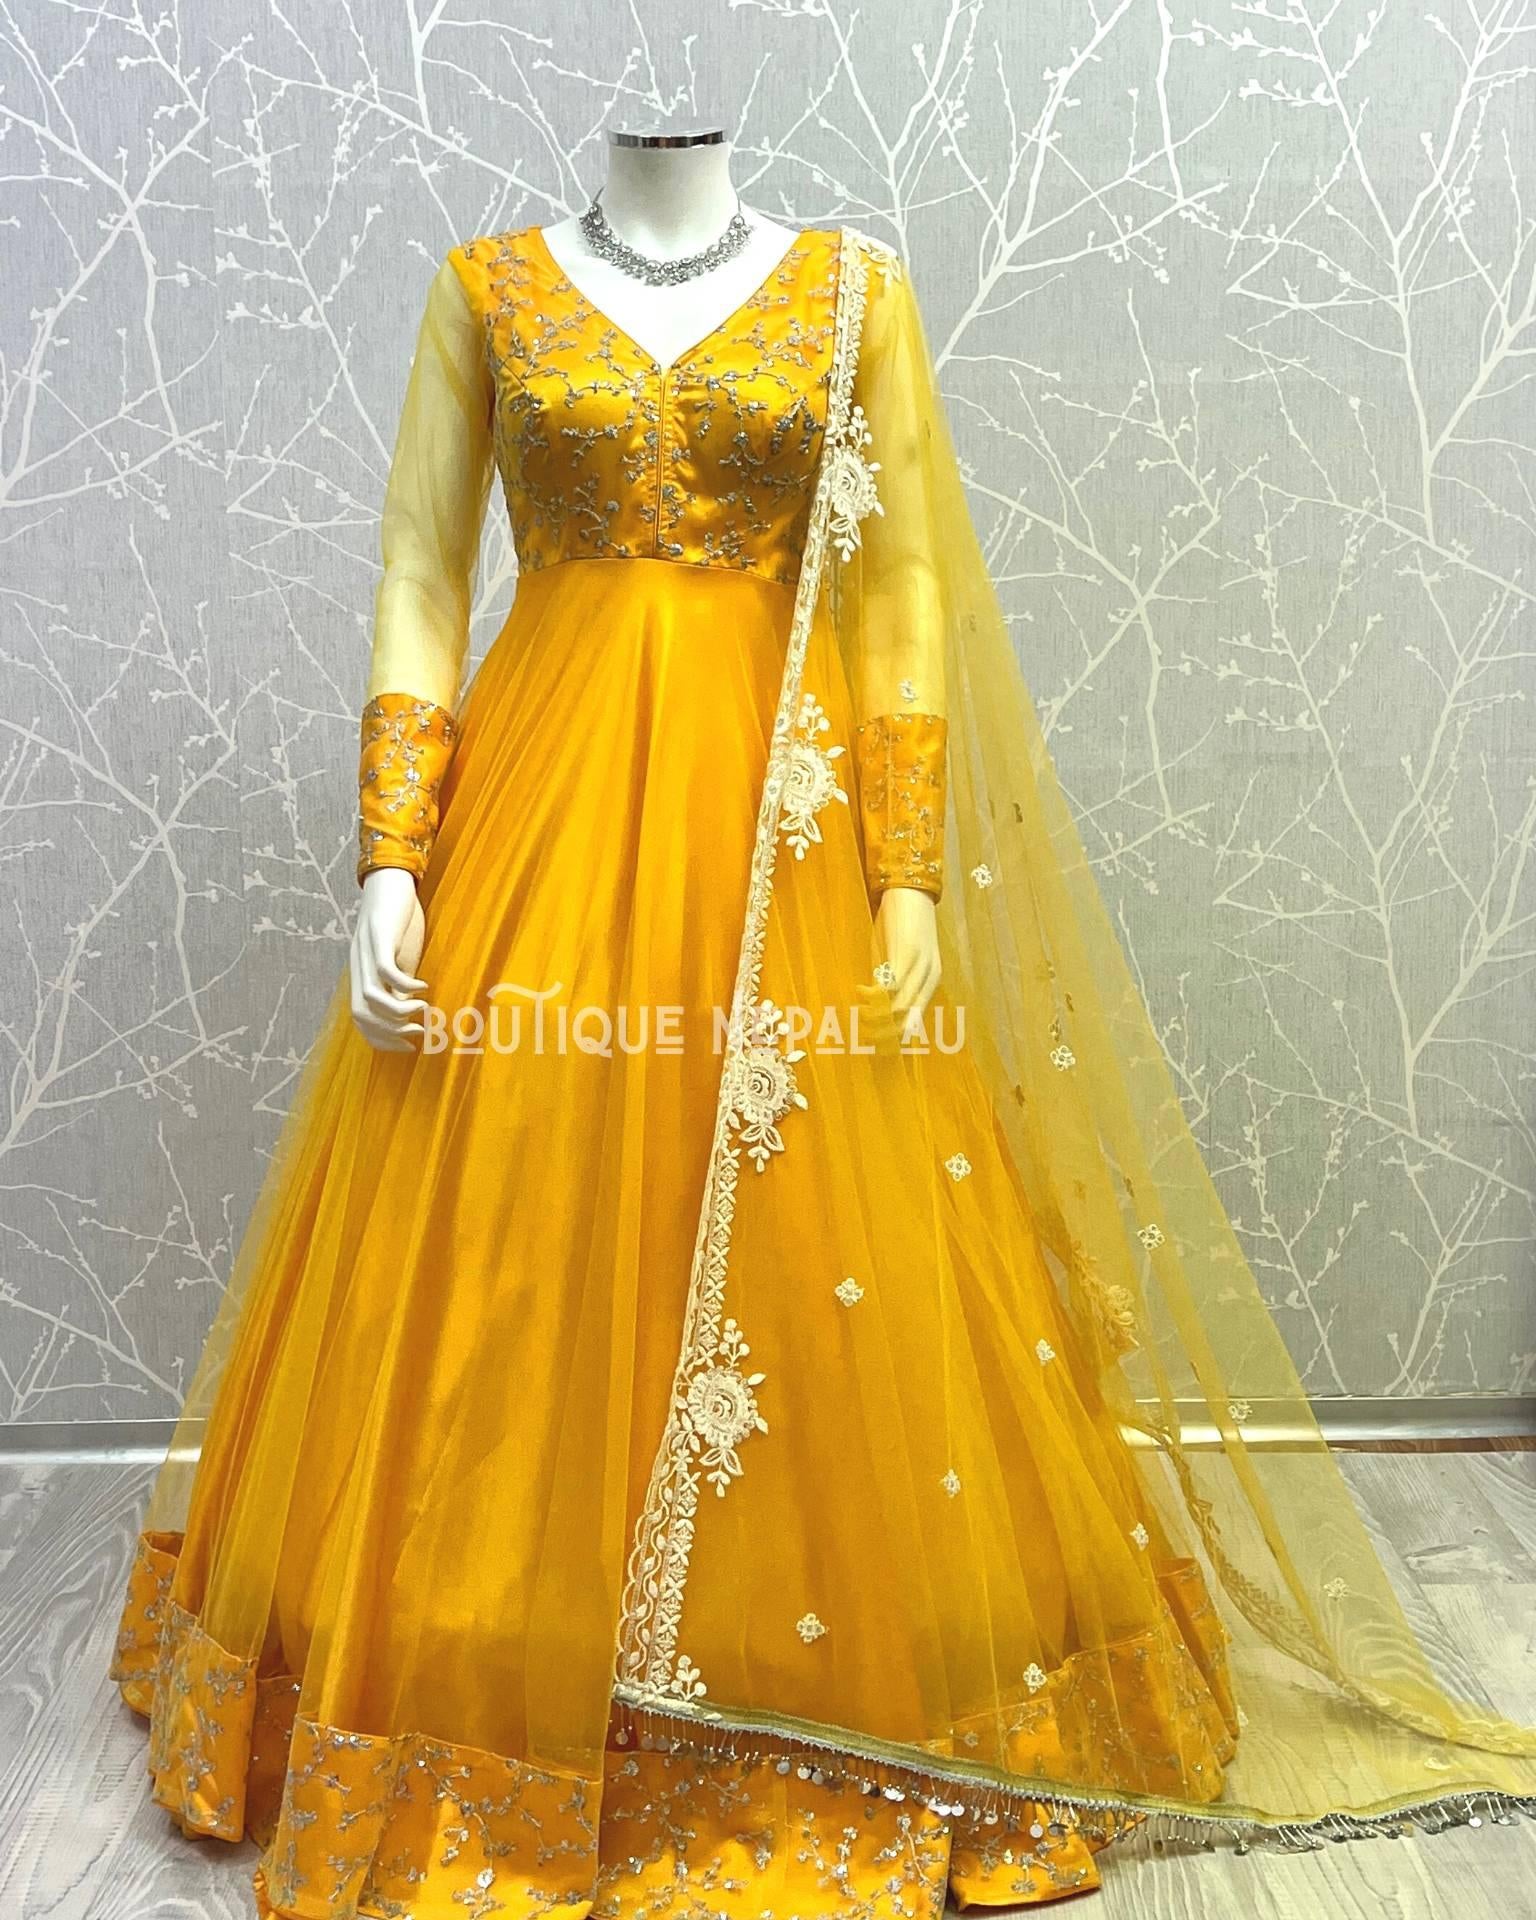 Yellow Net Designer Gown - Boutique Nepal Au